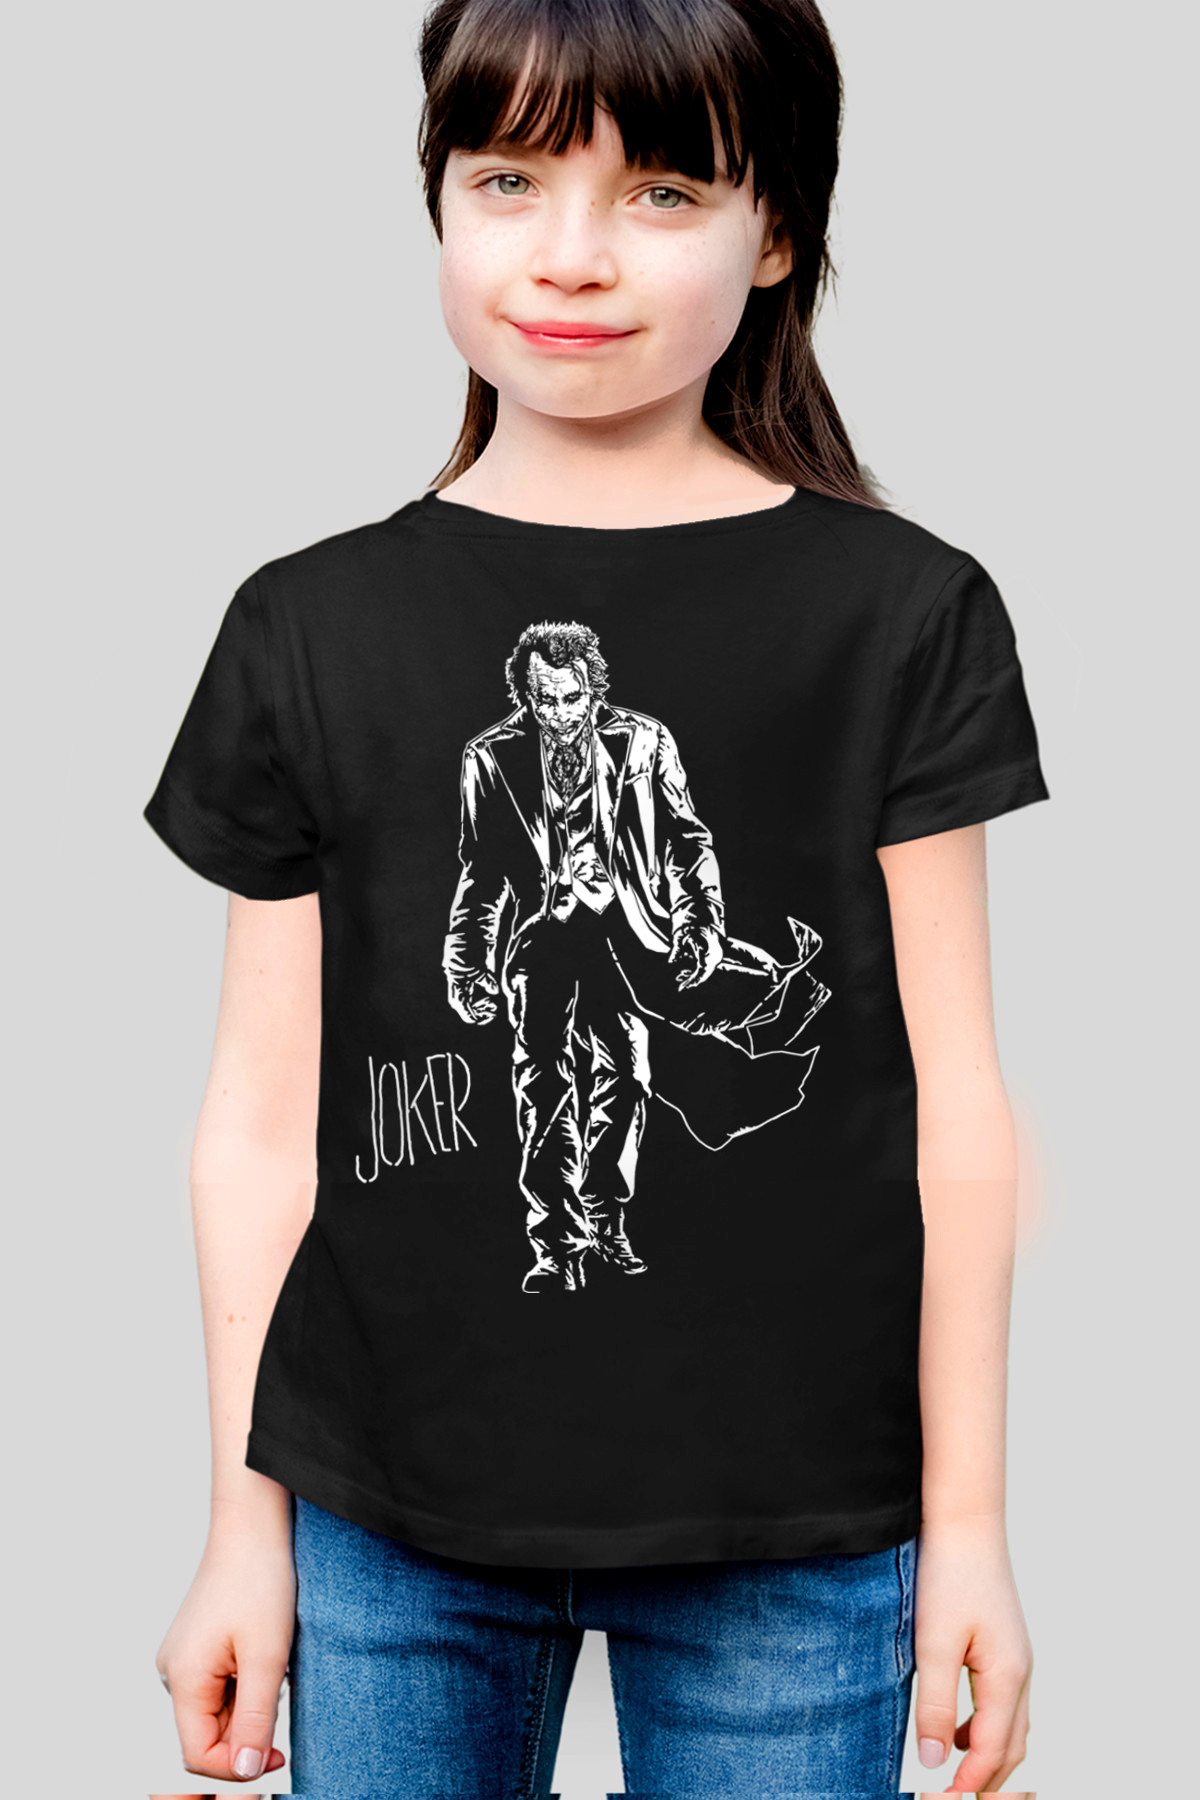 Paltolu Joker Siyah Kısa Kollu Çocuk T-shirt